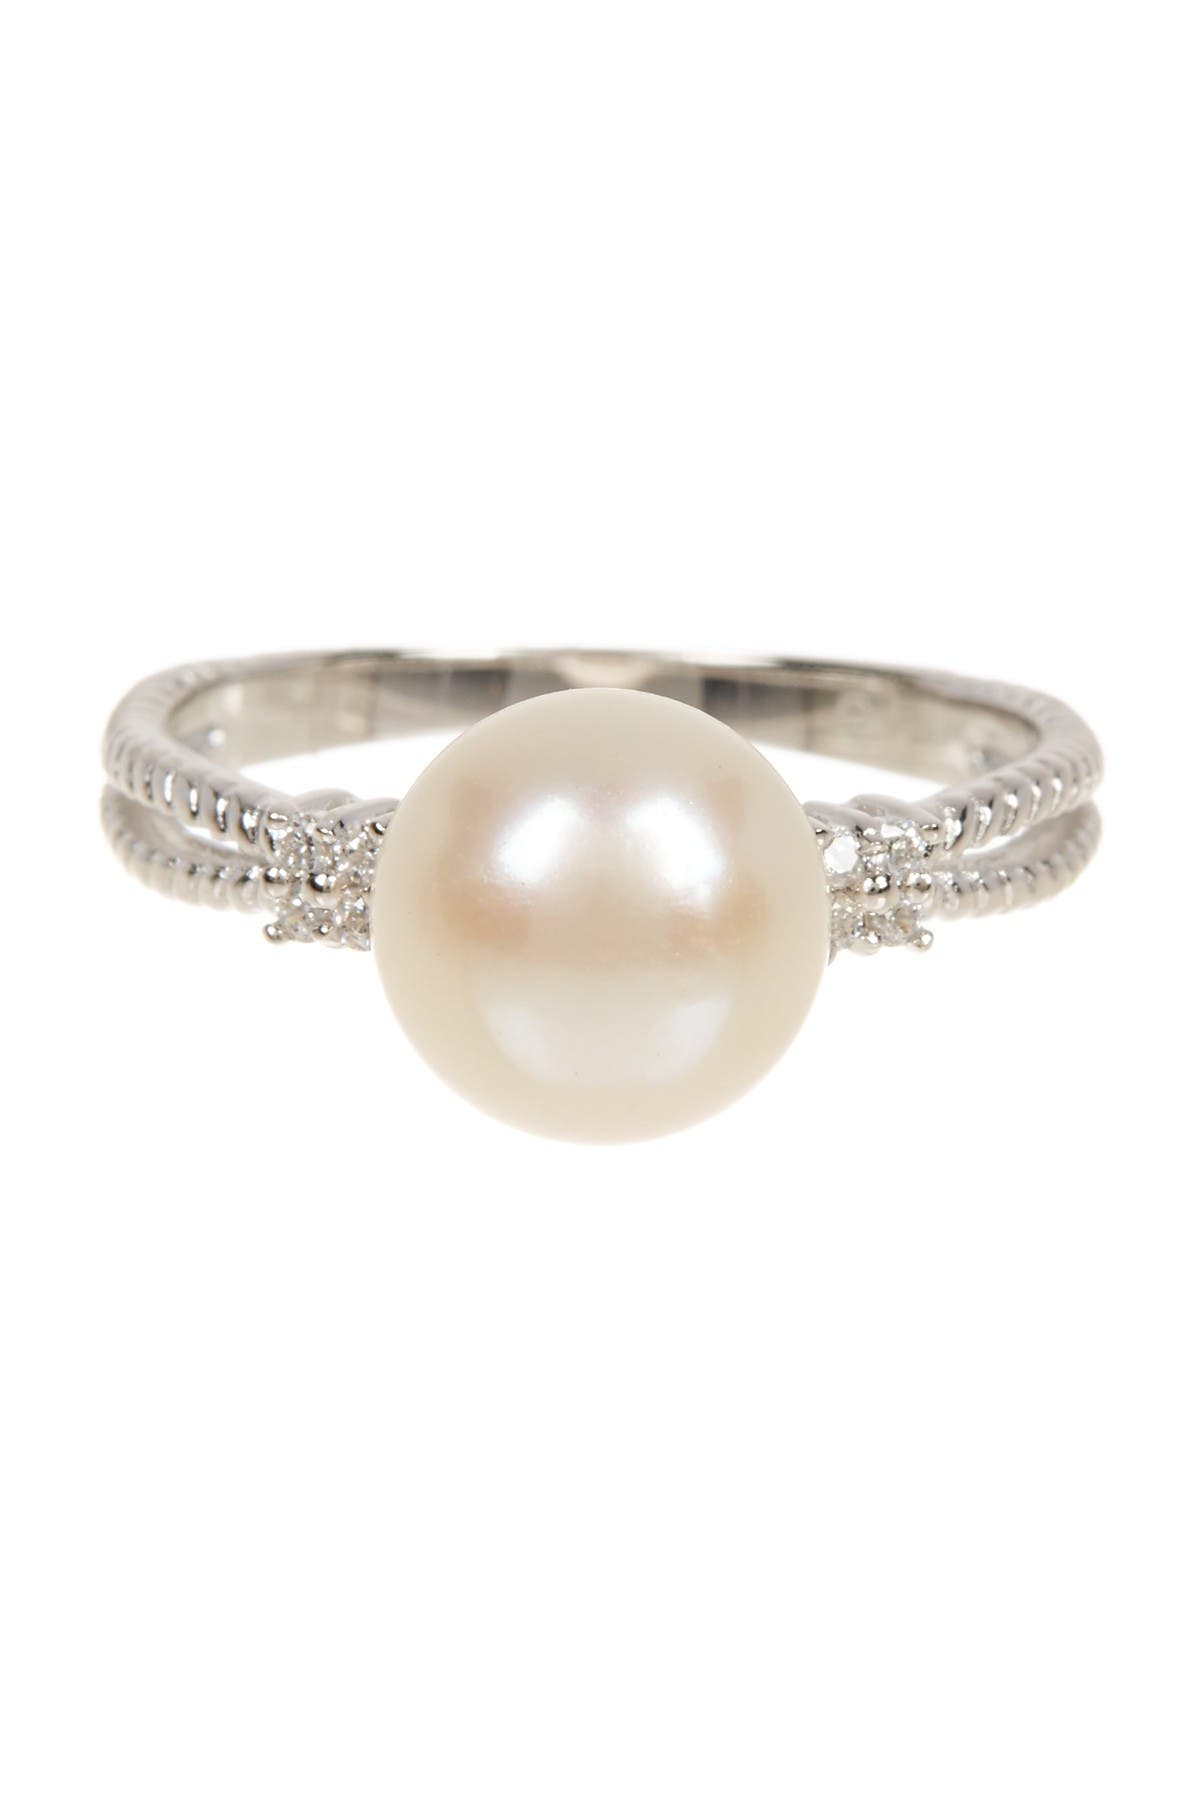 White Freshwater Pearl Band Ring. Freshwater Pearl Ring Pearl Band Ring Pearl Ring Pearl Band